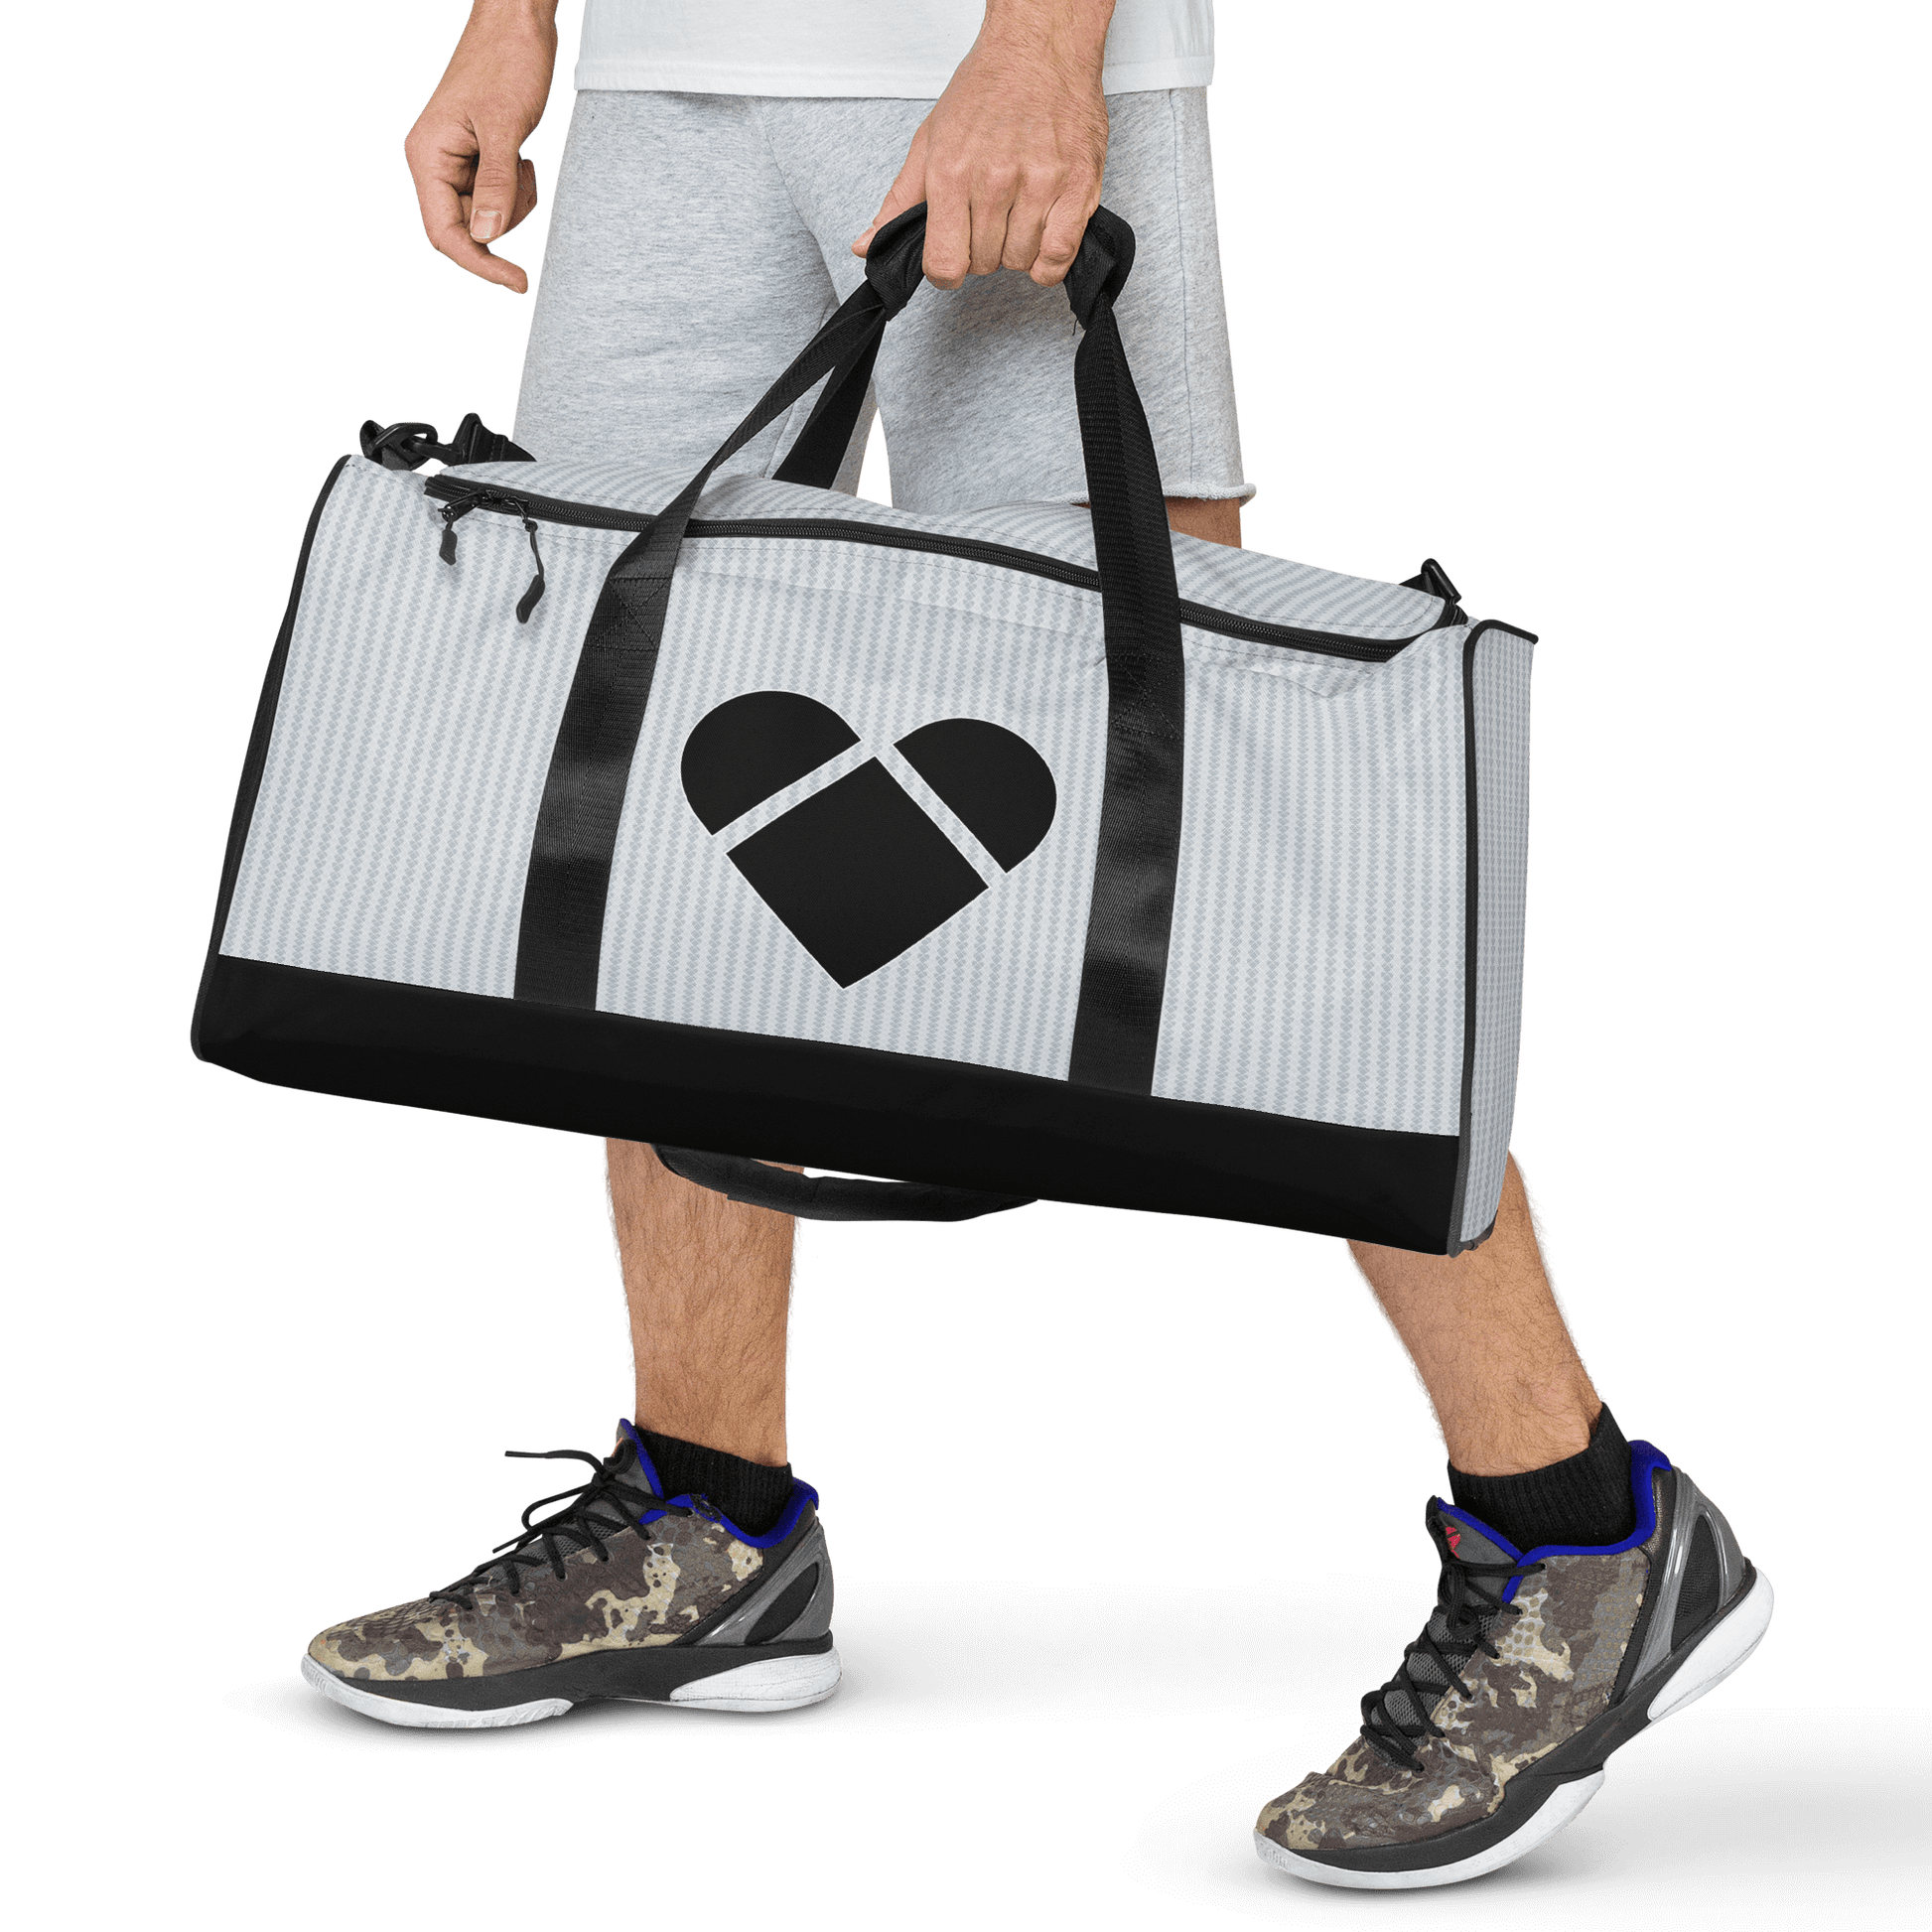 Stylish and comfy lovogram duffle bag | CRiZ AMOR's latest release